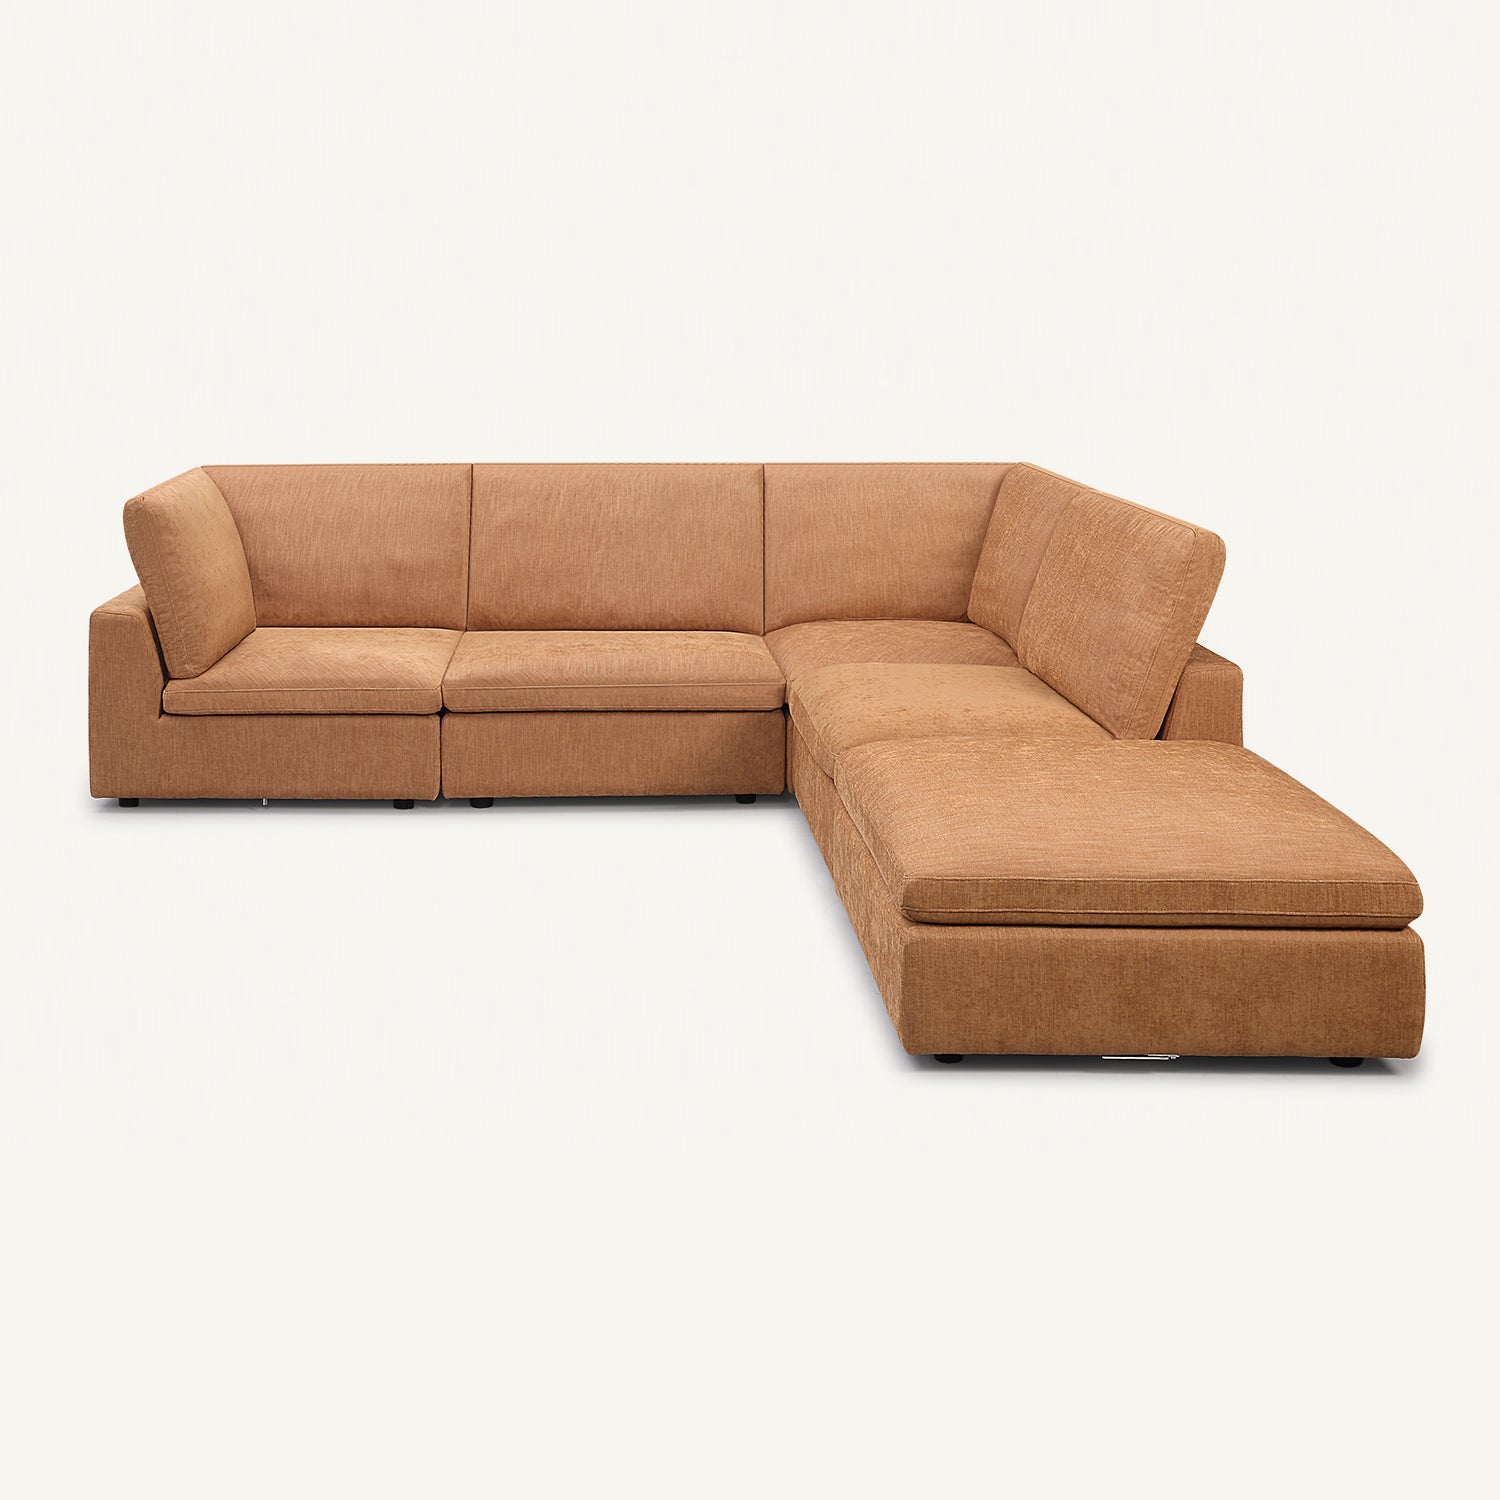 Cloud Tan Linen 4-Seat Sofa with Ottoman